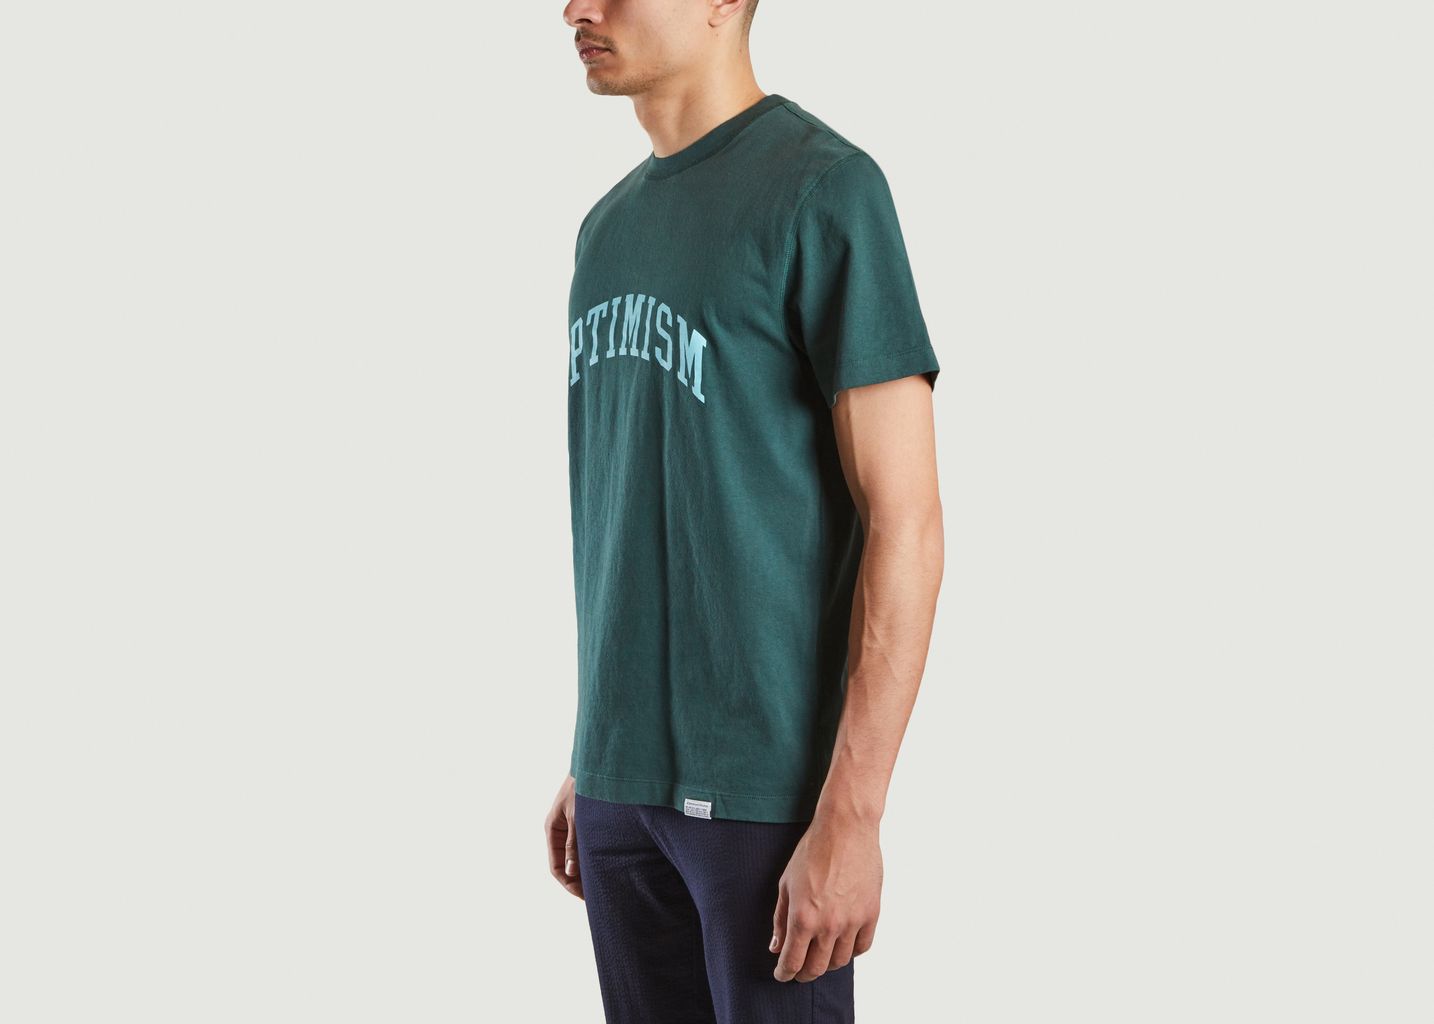 Bedrucktes T-Shirt Optimism - Edmmond Studios